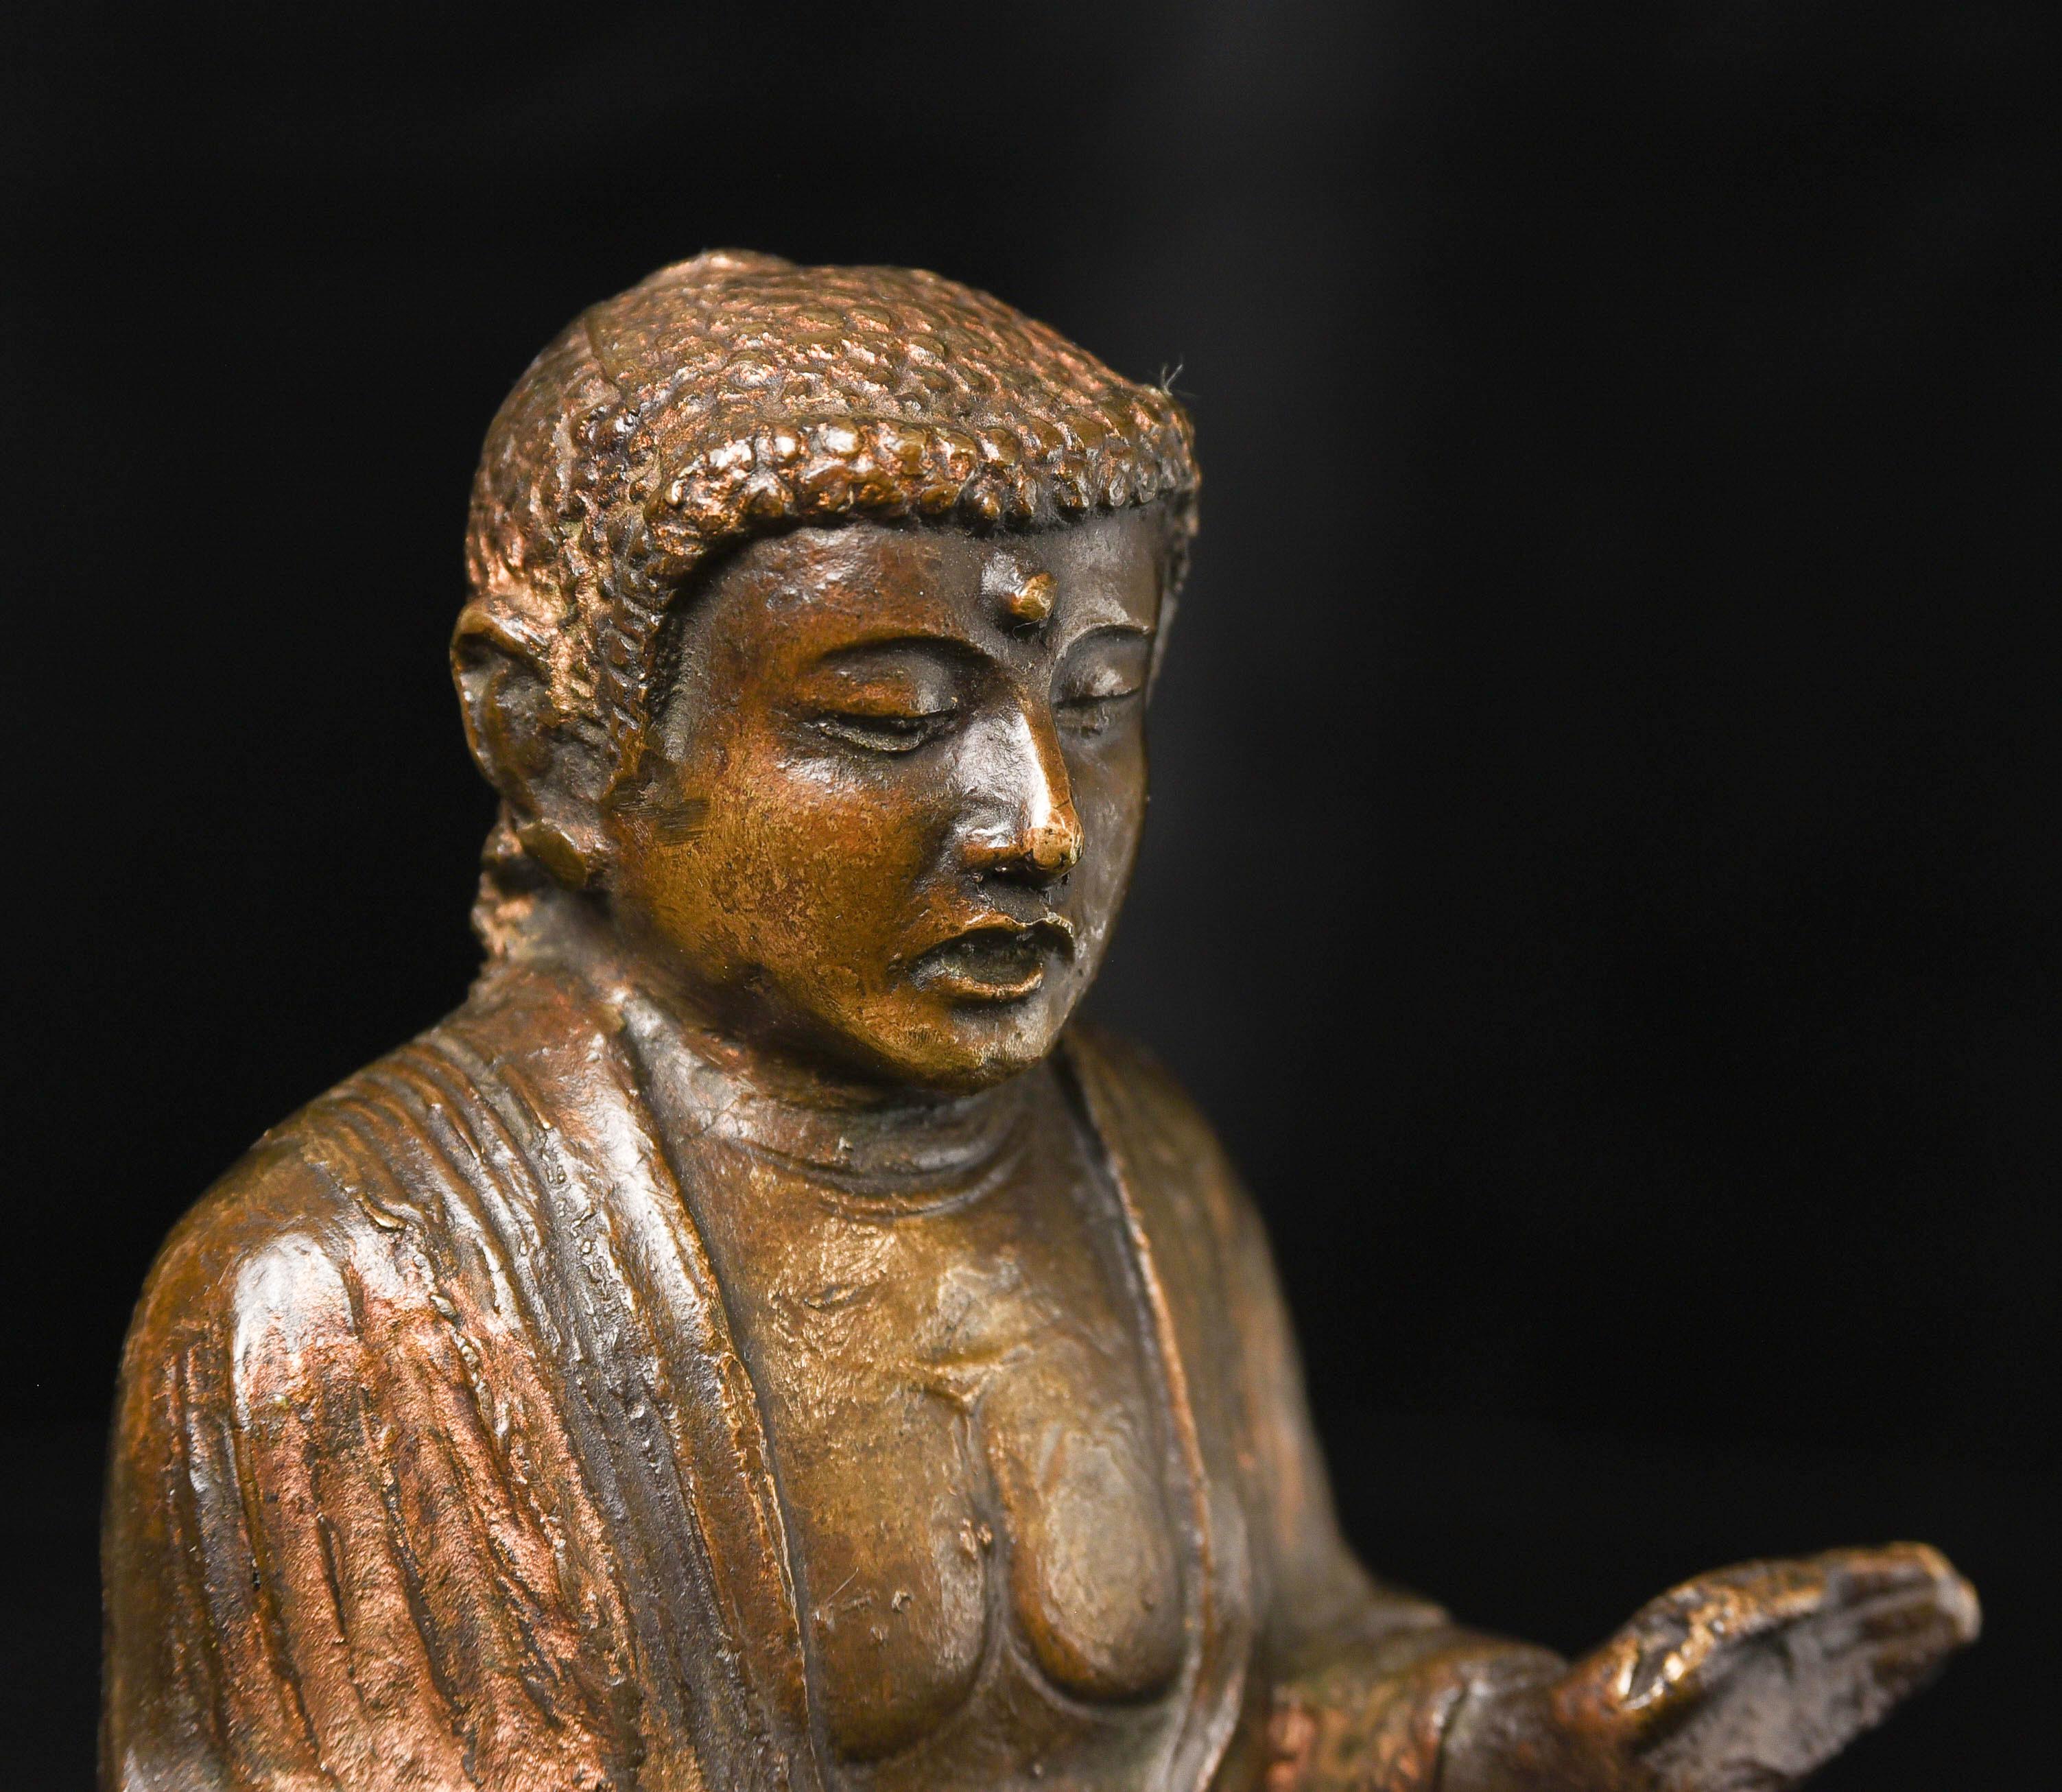 Antique Korean or Japanese Buddha - 9719 3